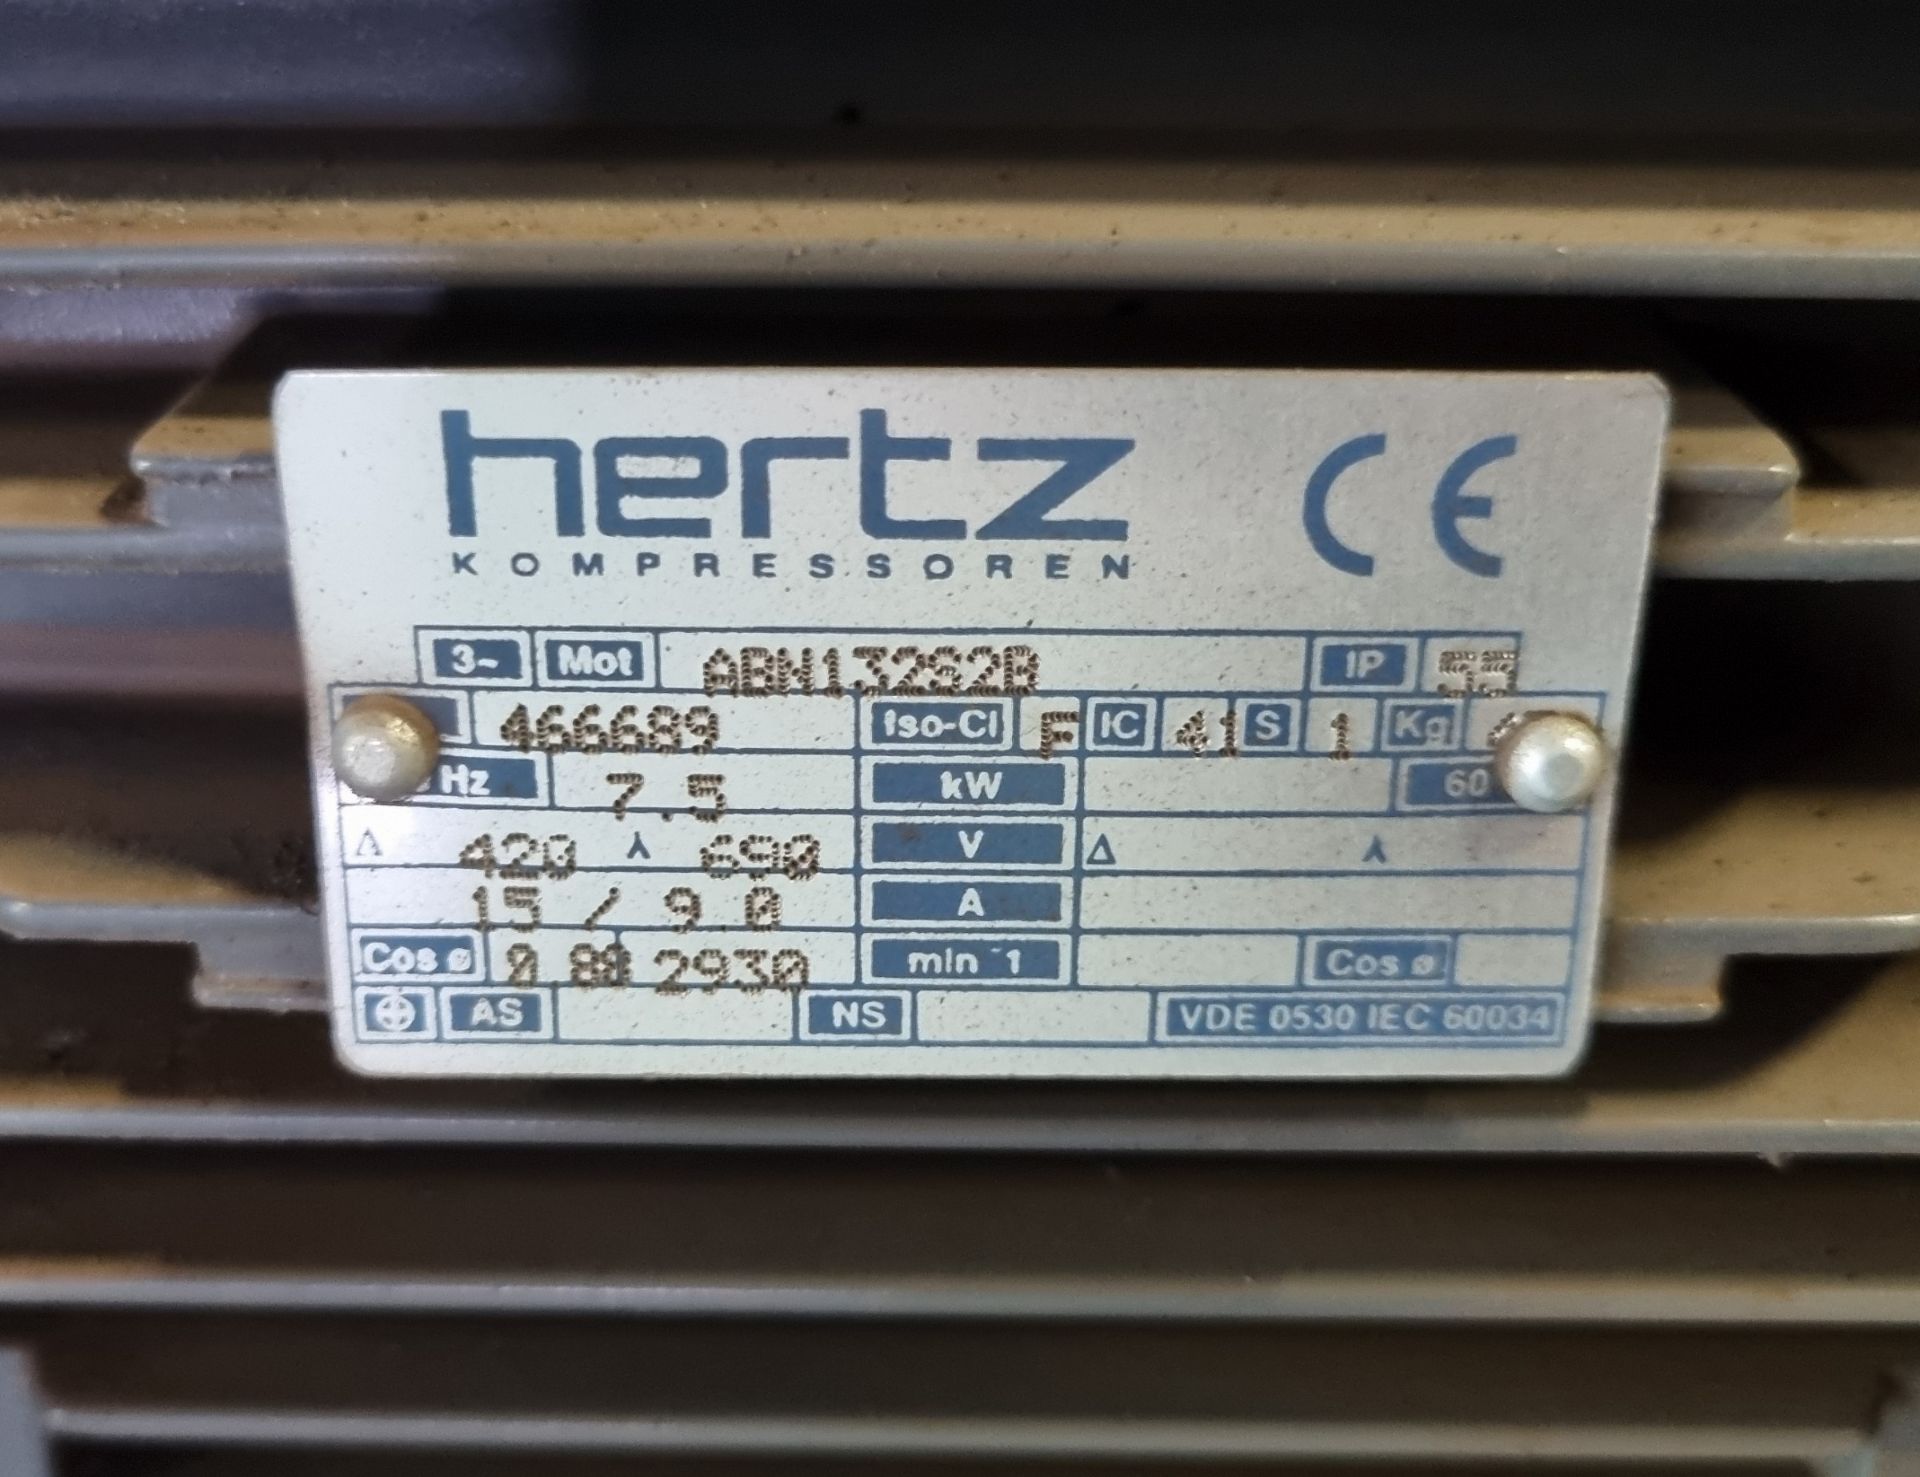 Hertz Kompressoren HGS 7 rotary screw compressor - Pressure: 10 BAR - 400V - 3 phase - 50Hz - Image 11 of 12